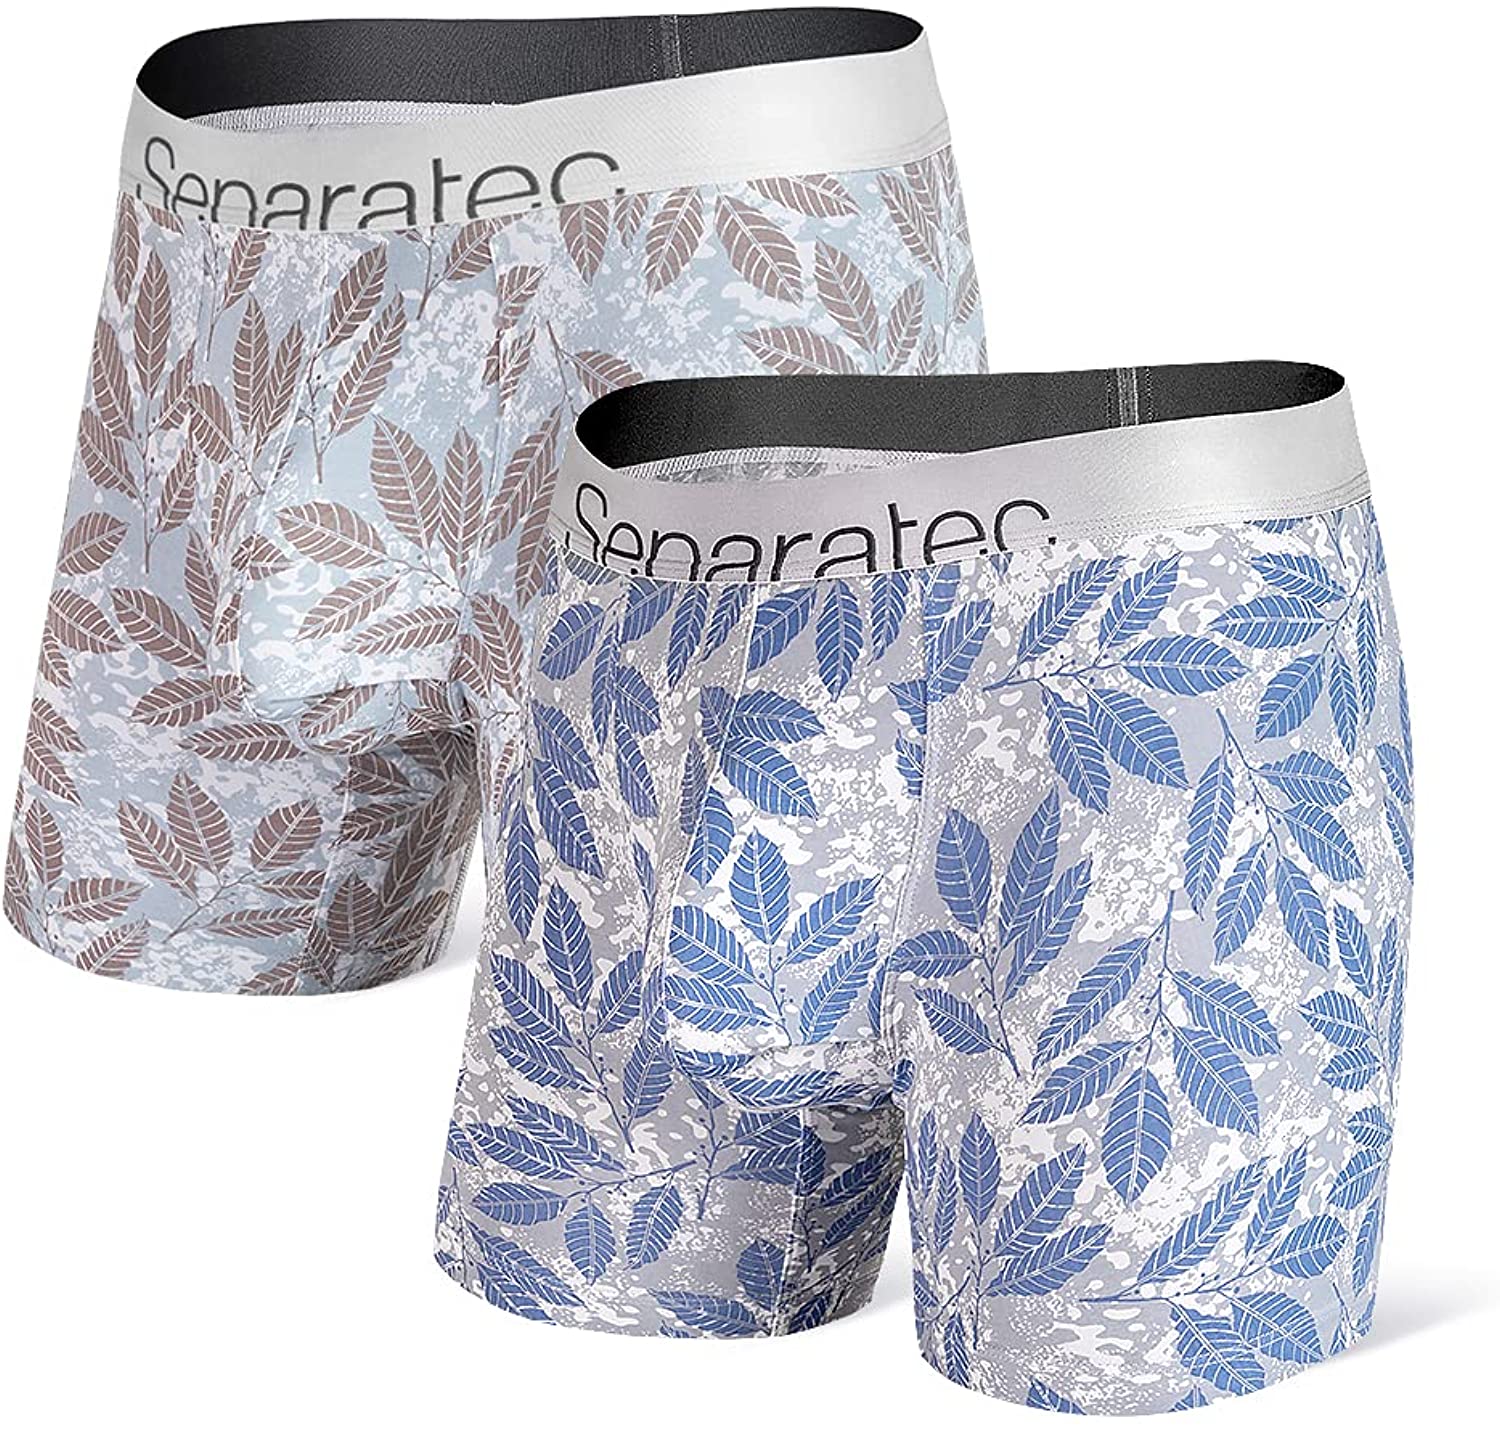 Separatec Men's Dual Pouch Underwear Comfy Soft Cotton or Micro Modal Boxer  Briefs 3 Pack, Version A:heather Light Blue+heather Dark Gray+heather Navy  Blue, S price in UAE,  UAE